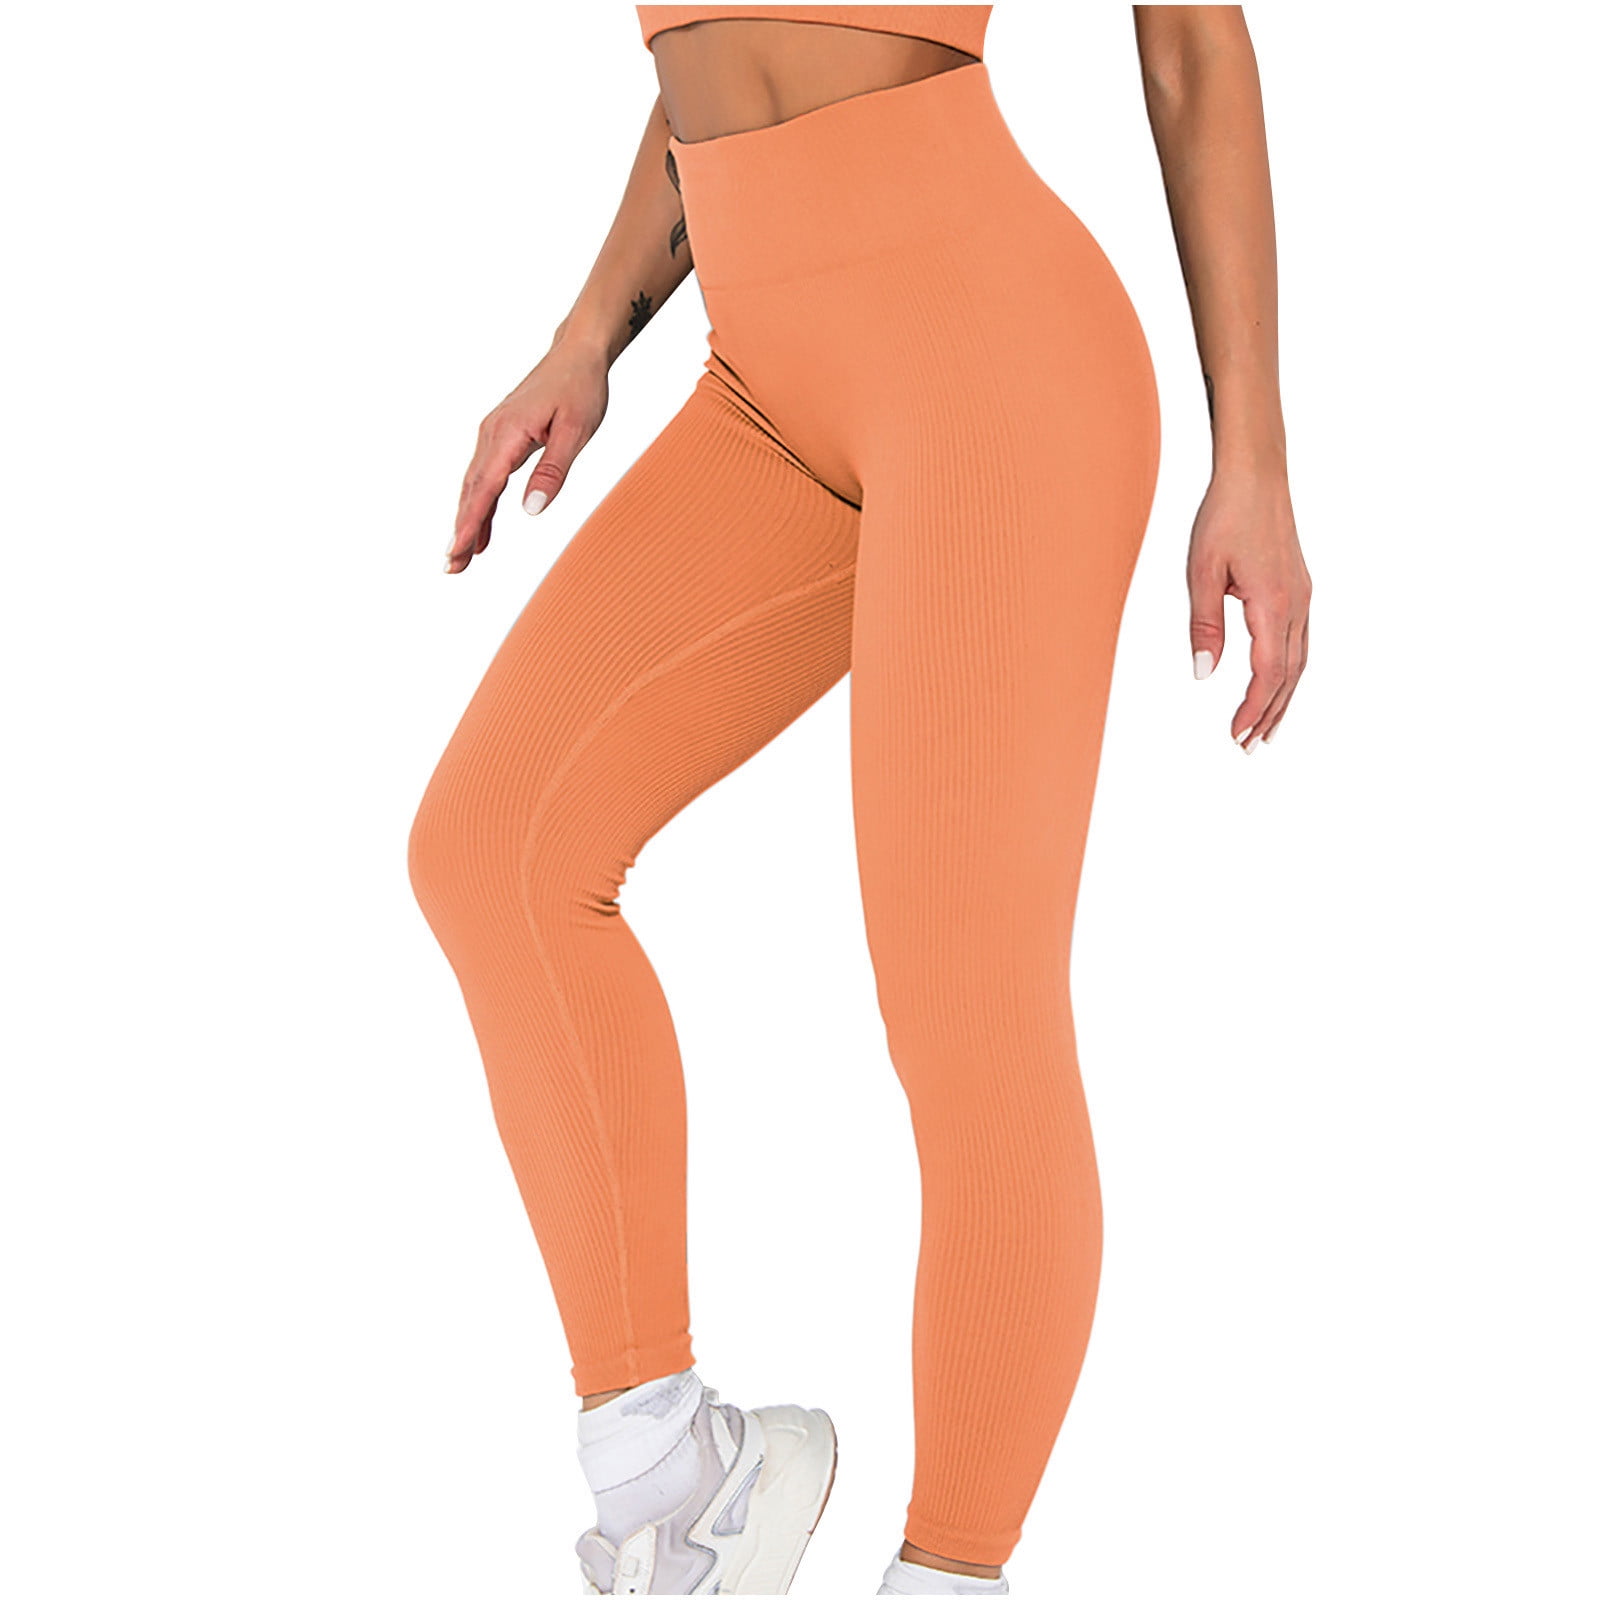 XTUPO High Waist Leggings Soft Slim Yoga Pants Tummy Control Workout  Leggings 4 Way Stretch Fabric Orange L